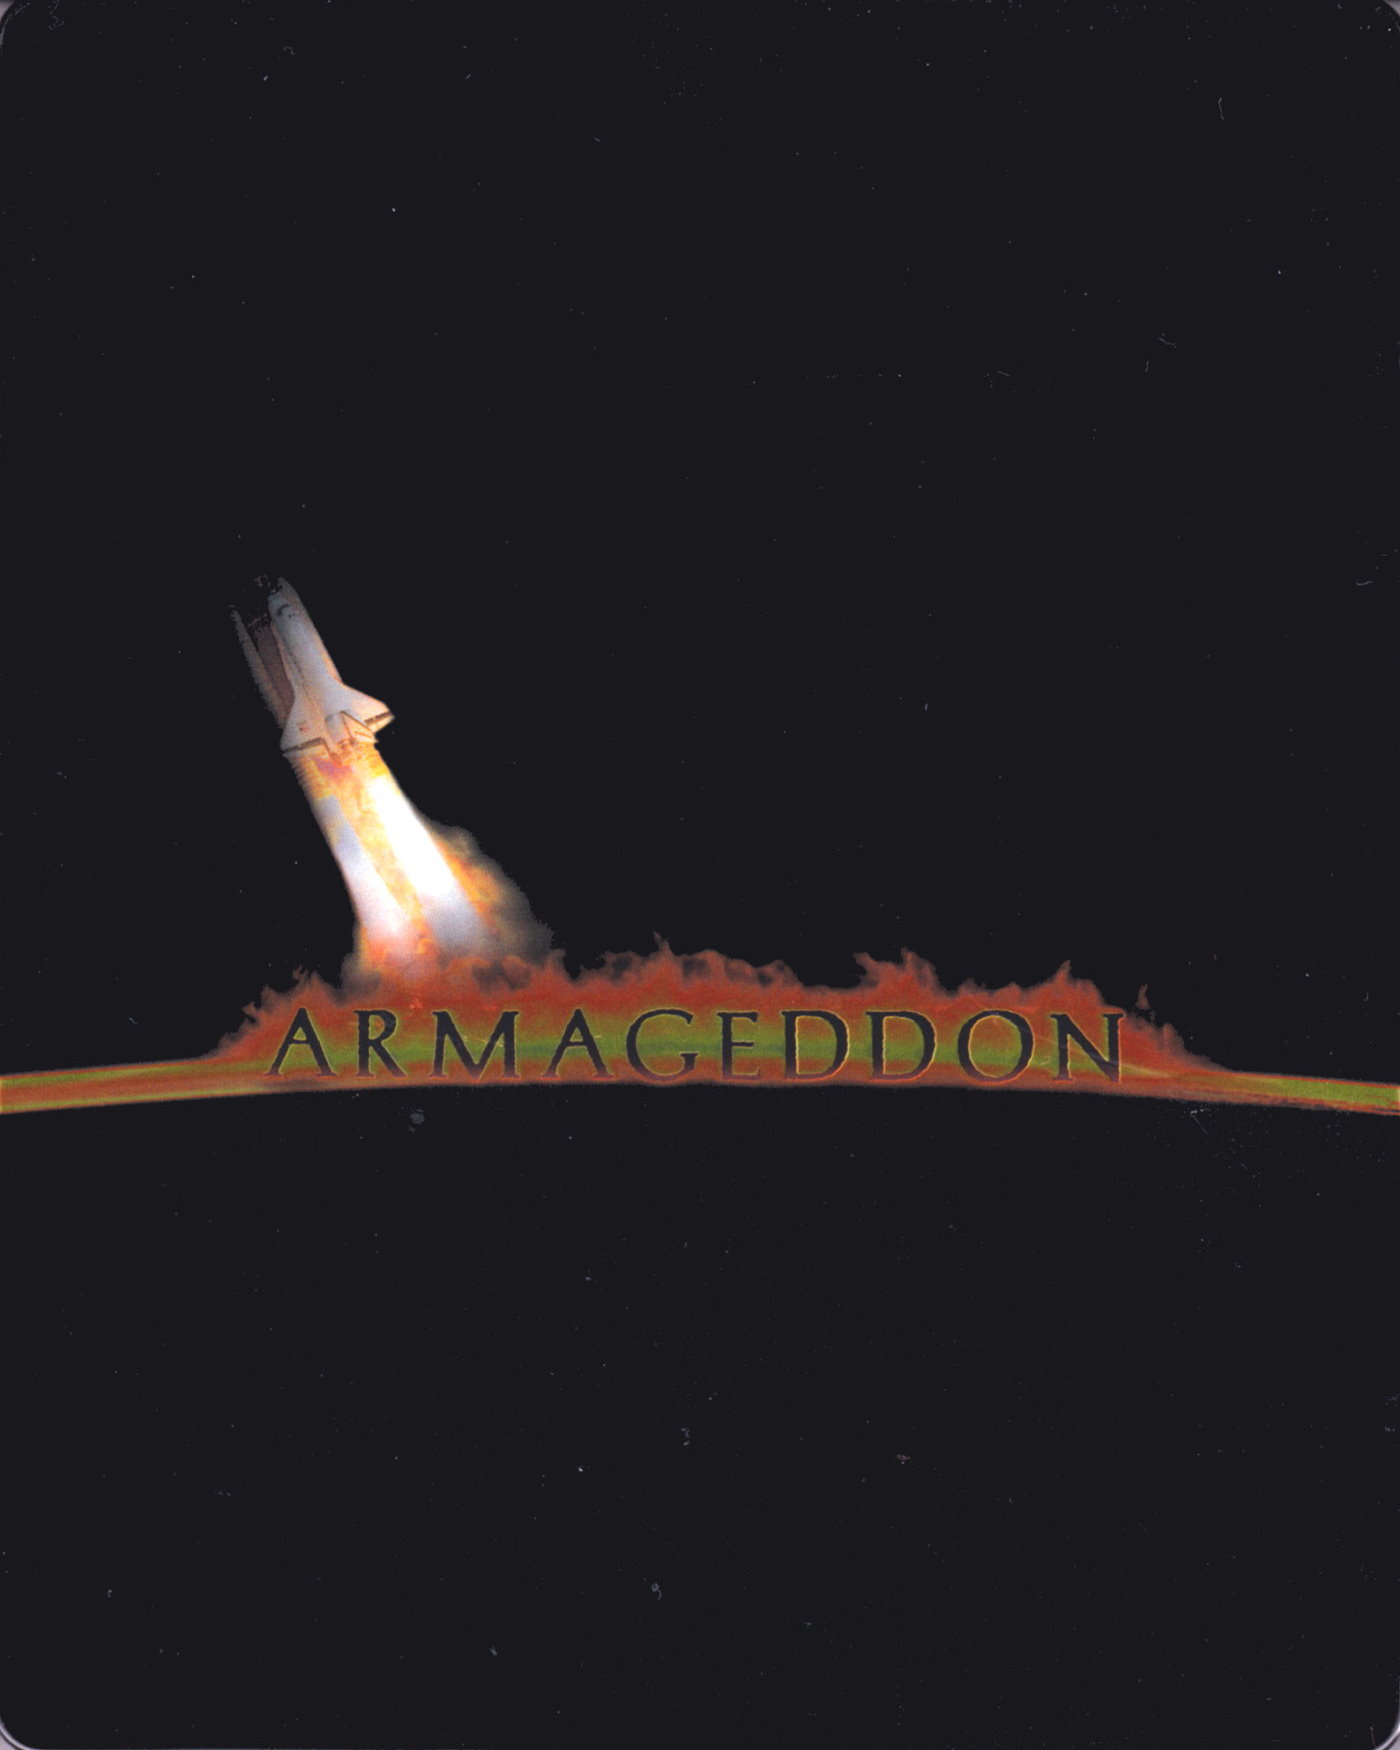 Cover - Armageddon - Das jüngste Gericht.jpg